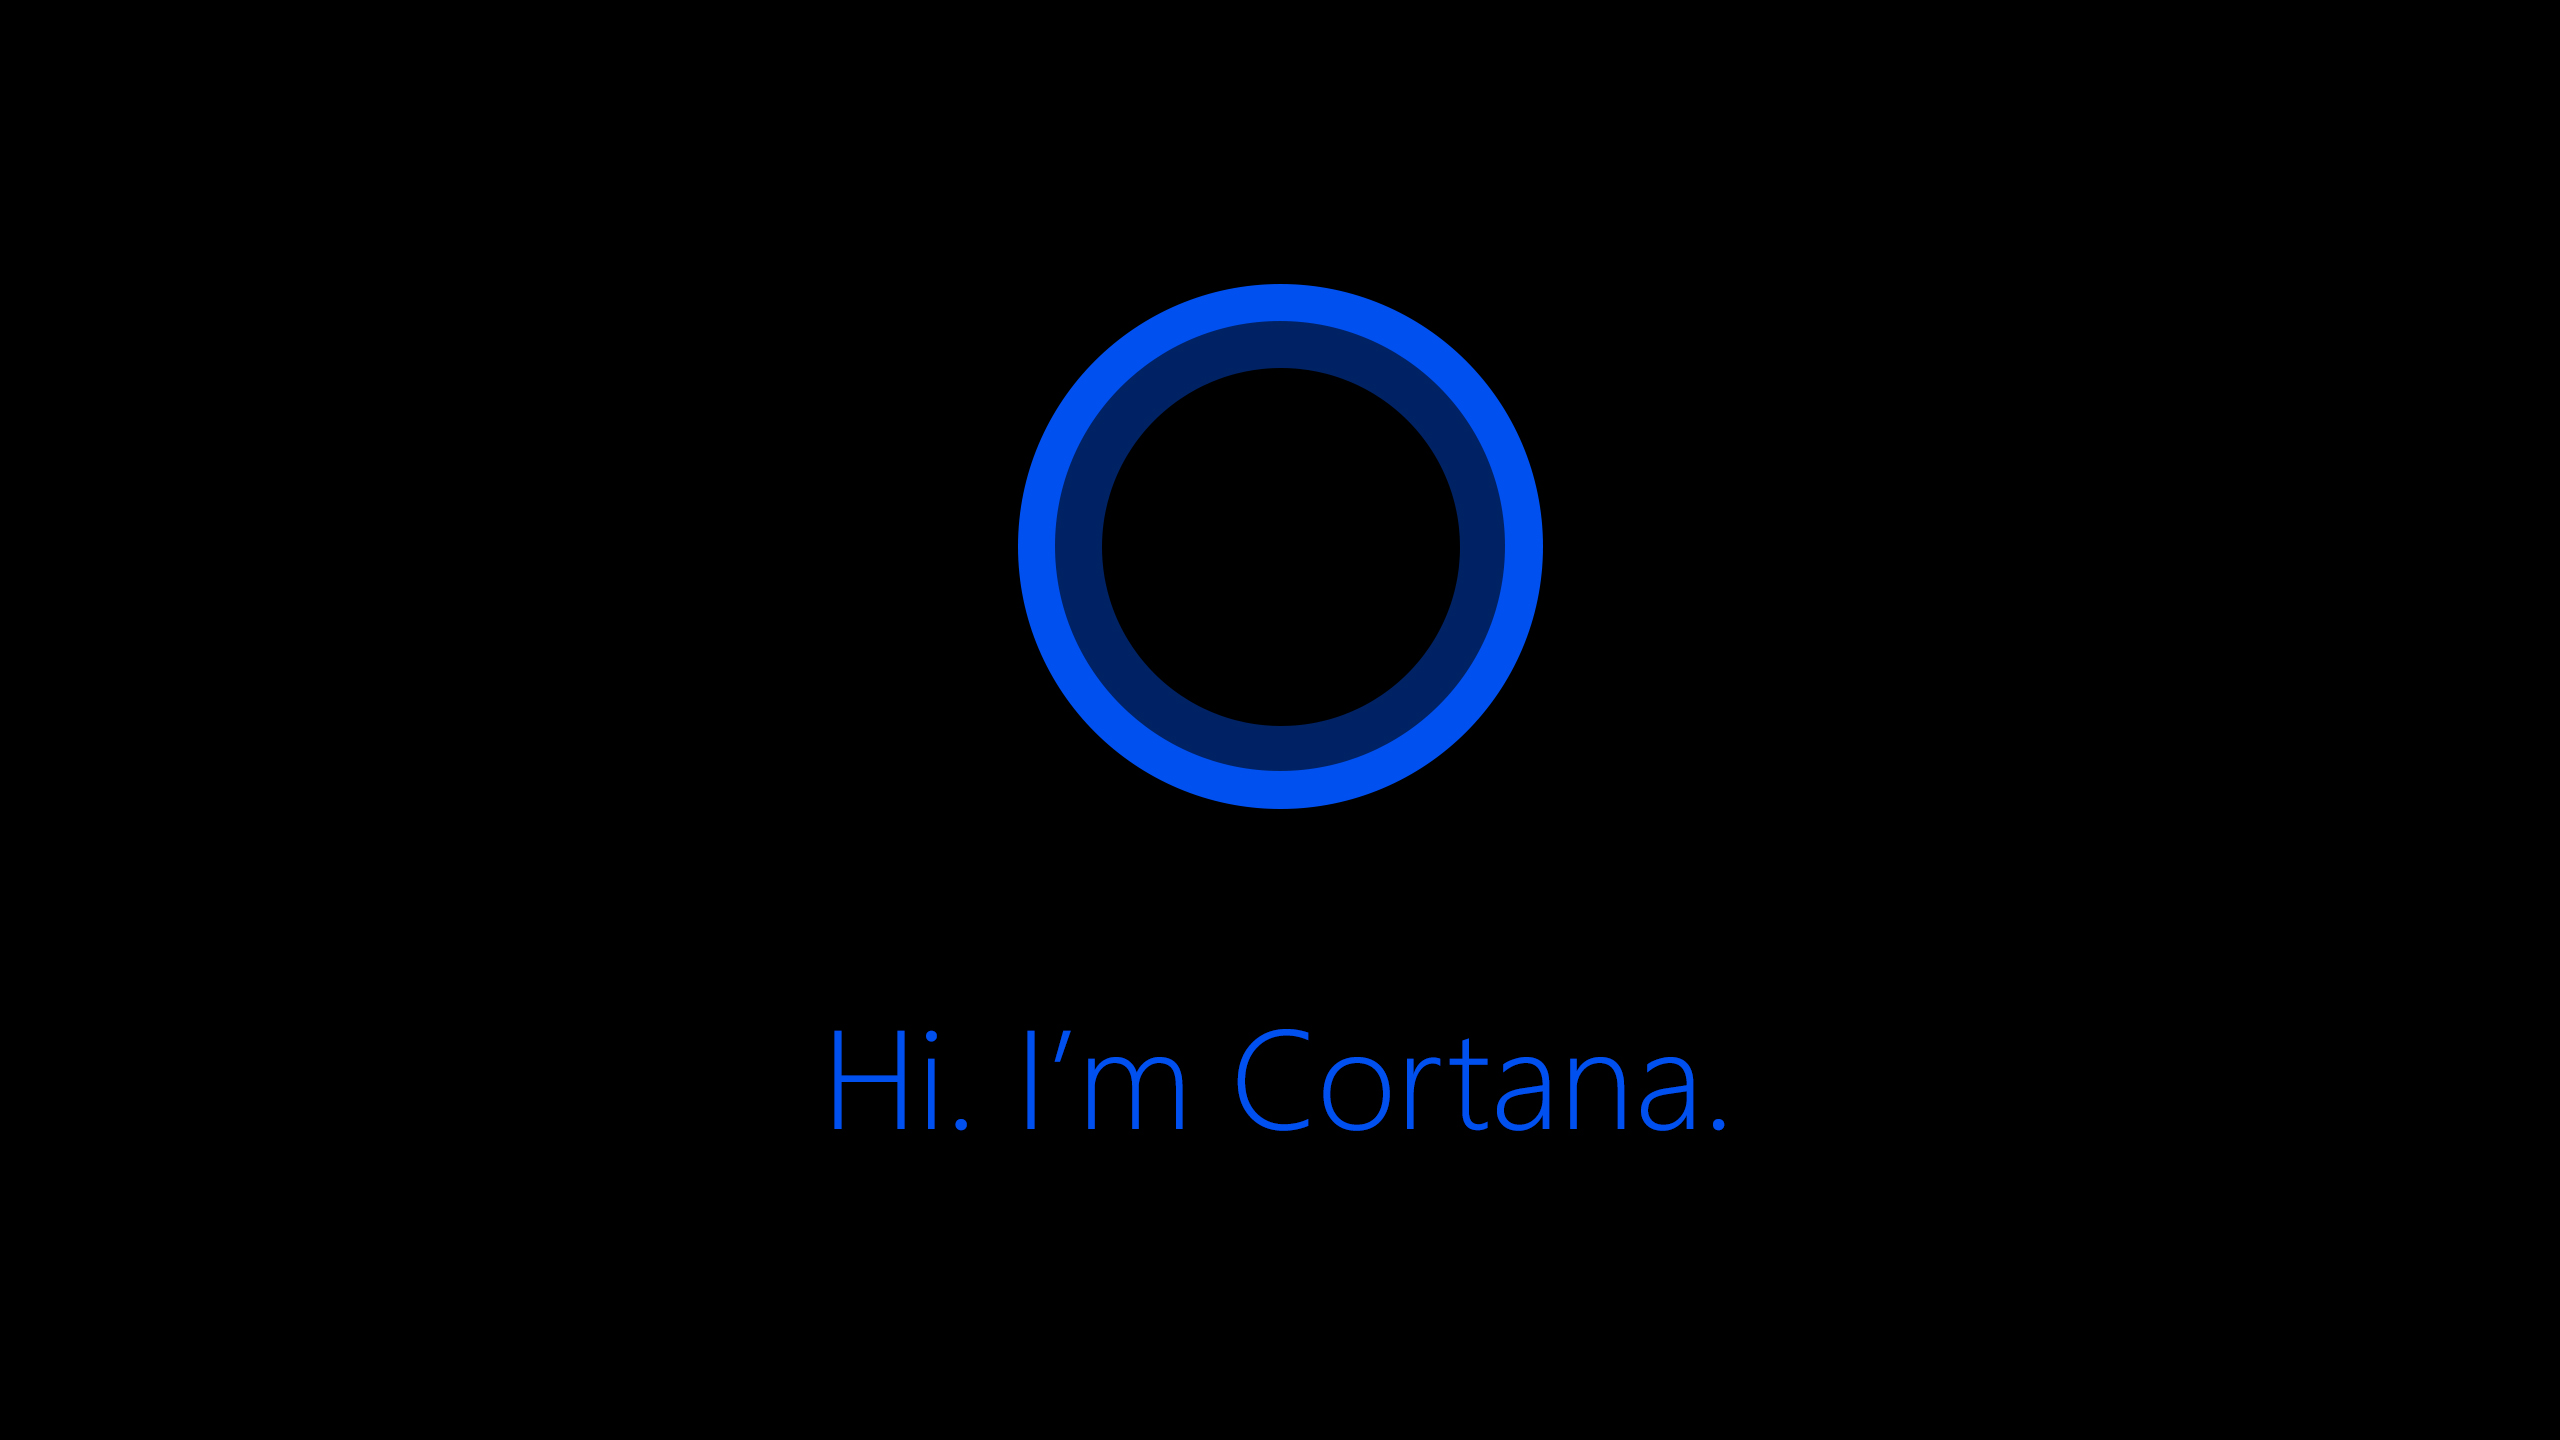 Hi Im Cortana by ljdesigner on